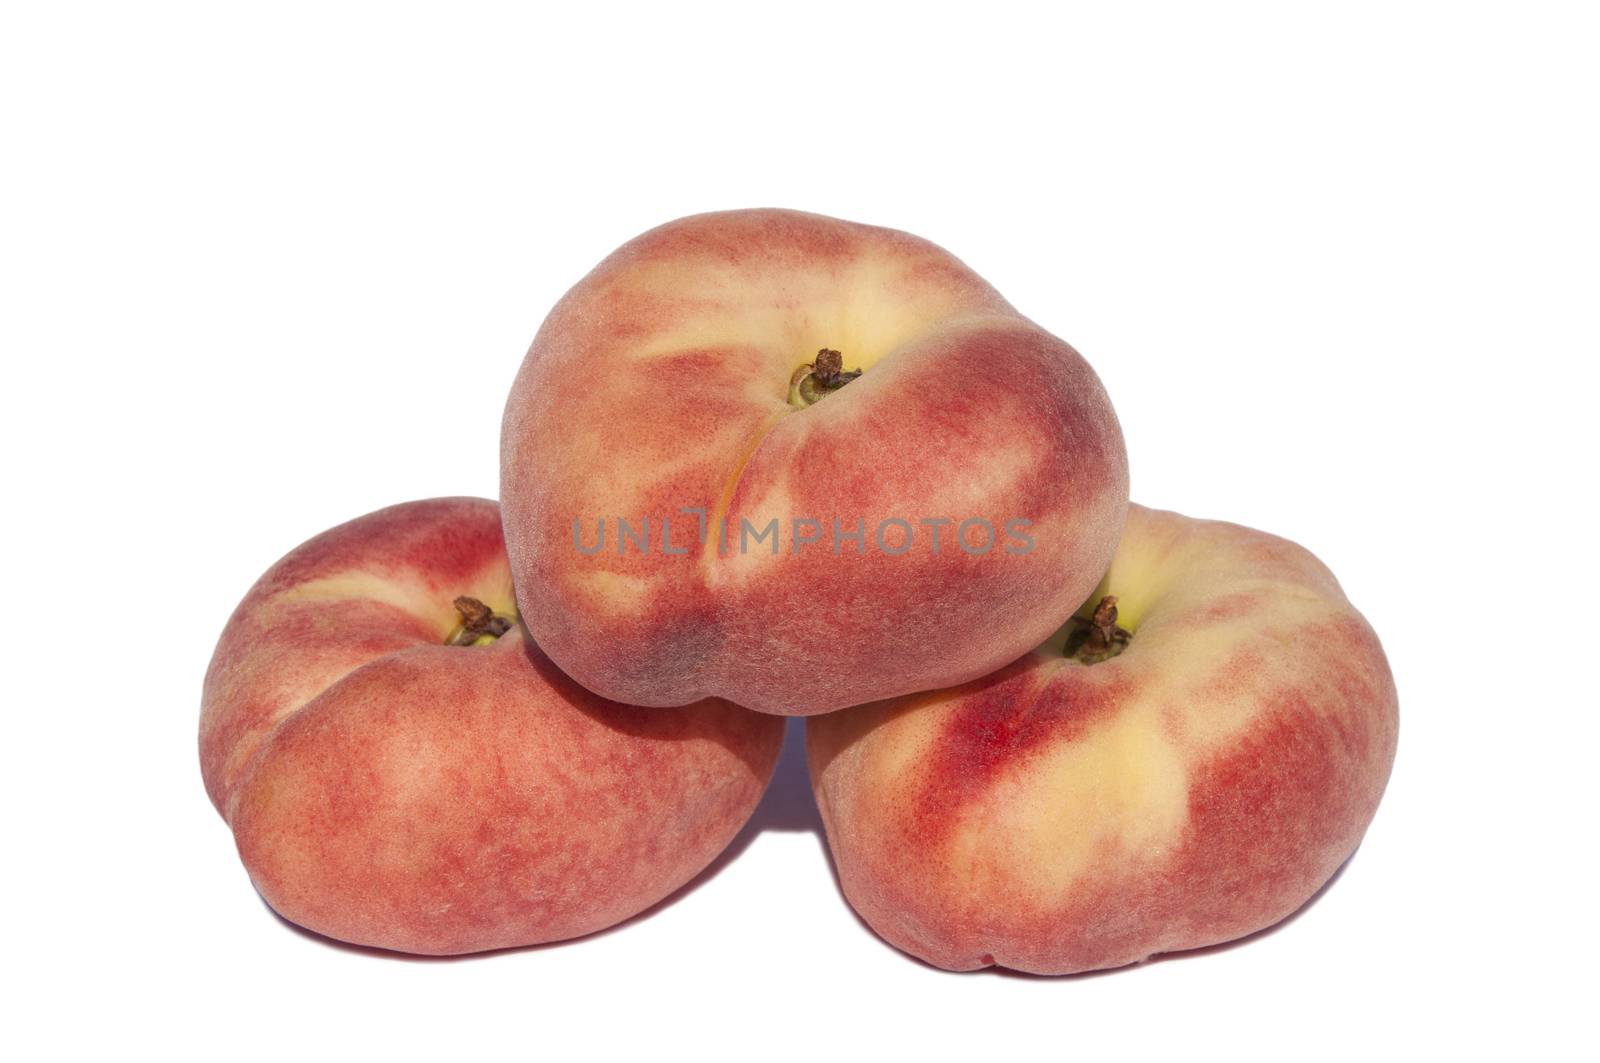 Three sweet flat peaches on a white background